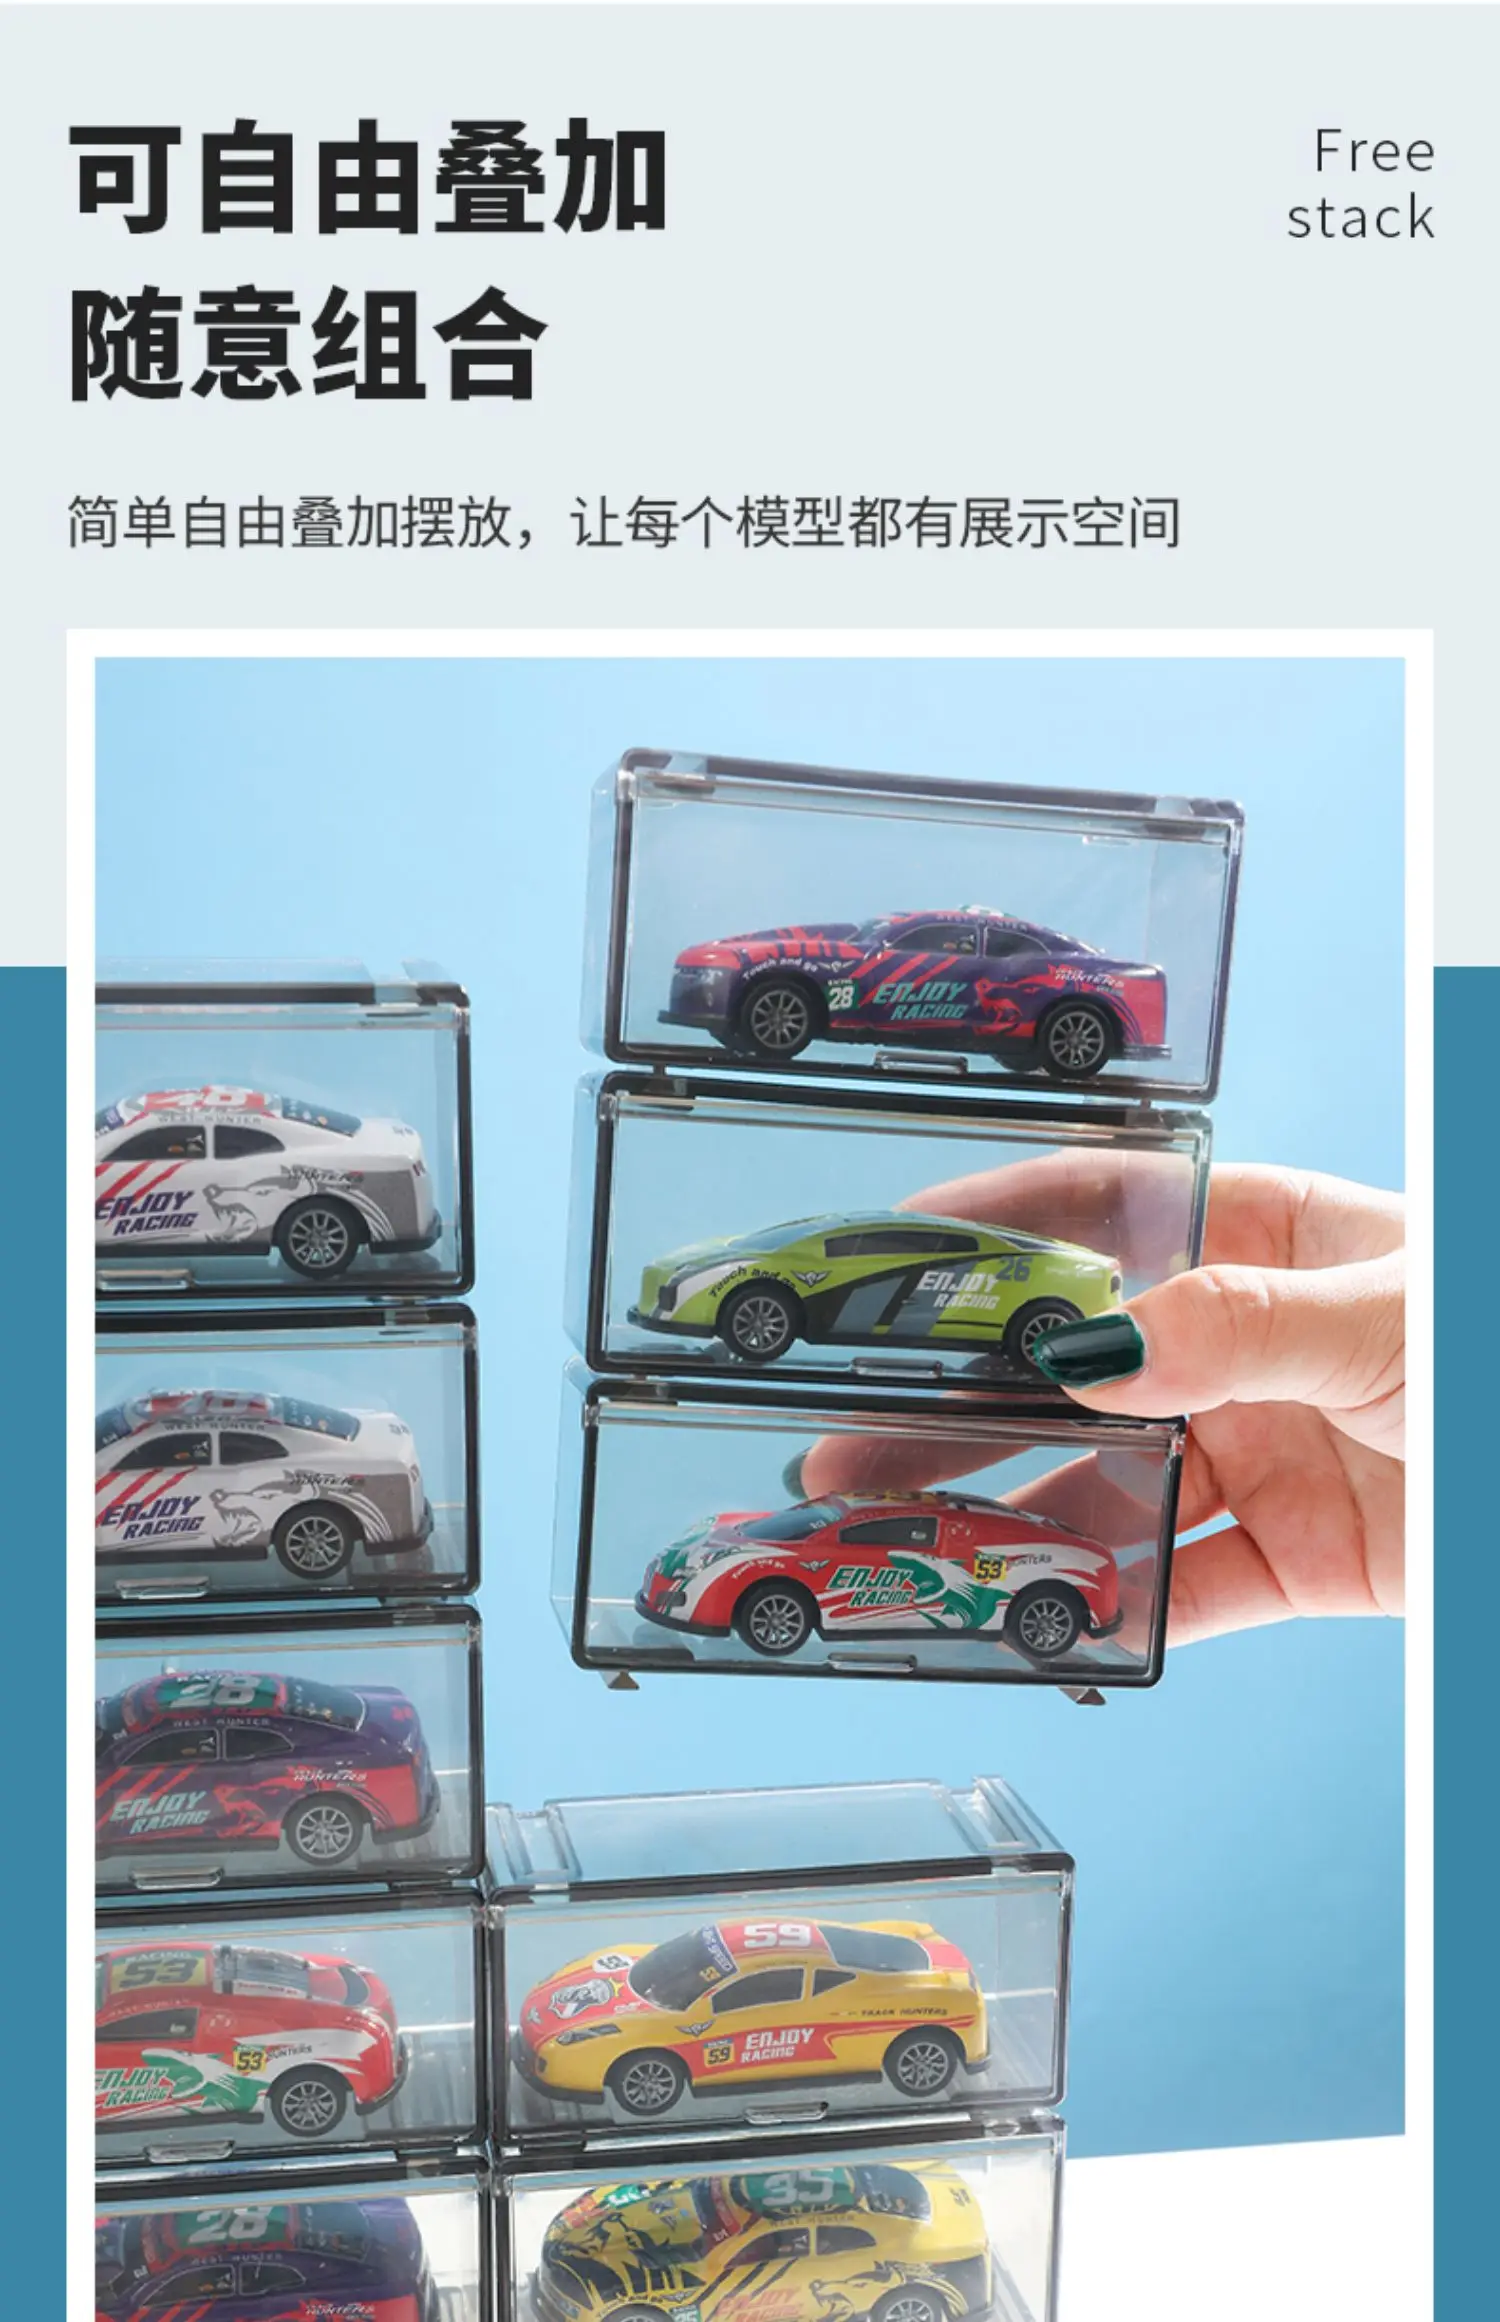 Acrylic Hot Wheels Car Storage Box Diecast 1/64 Vehicles Display